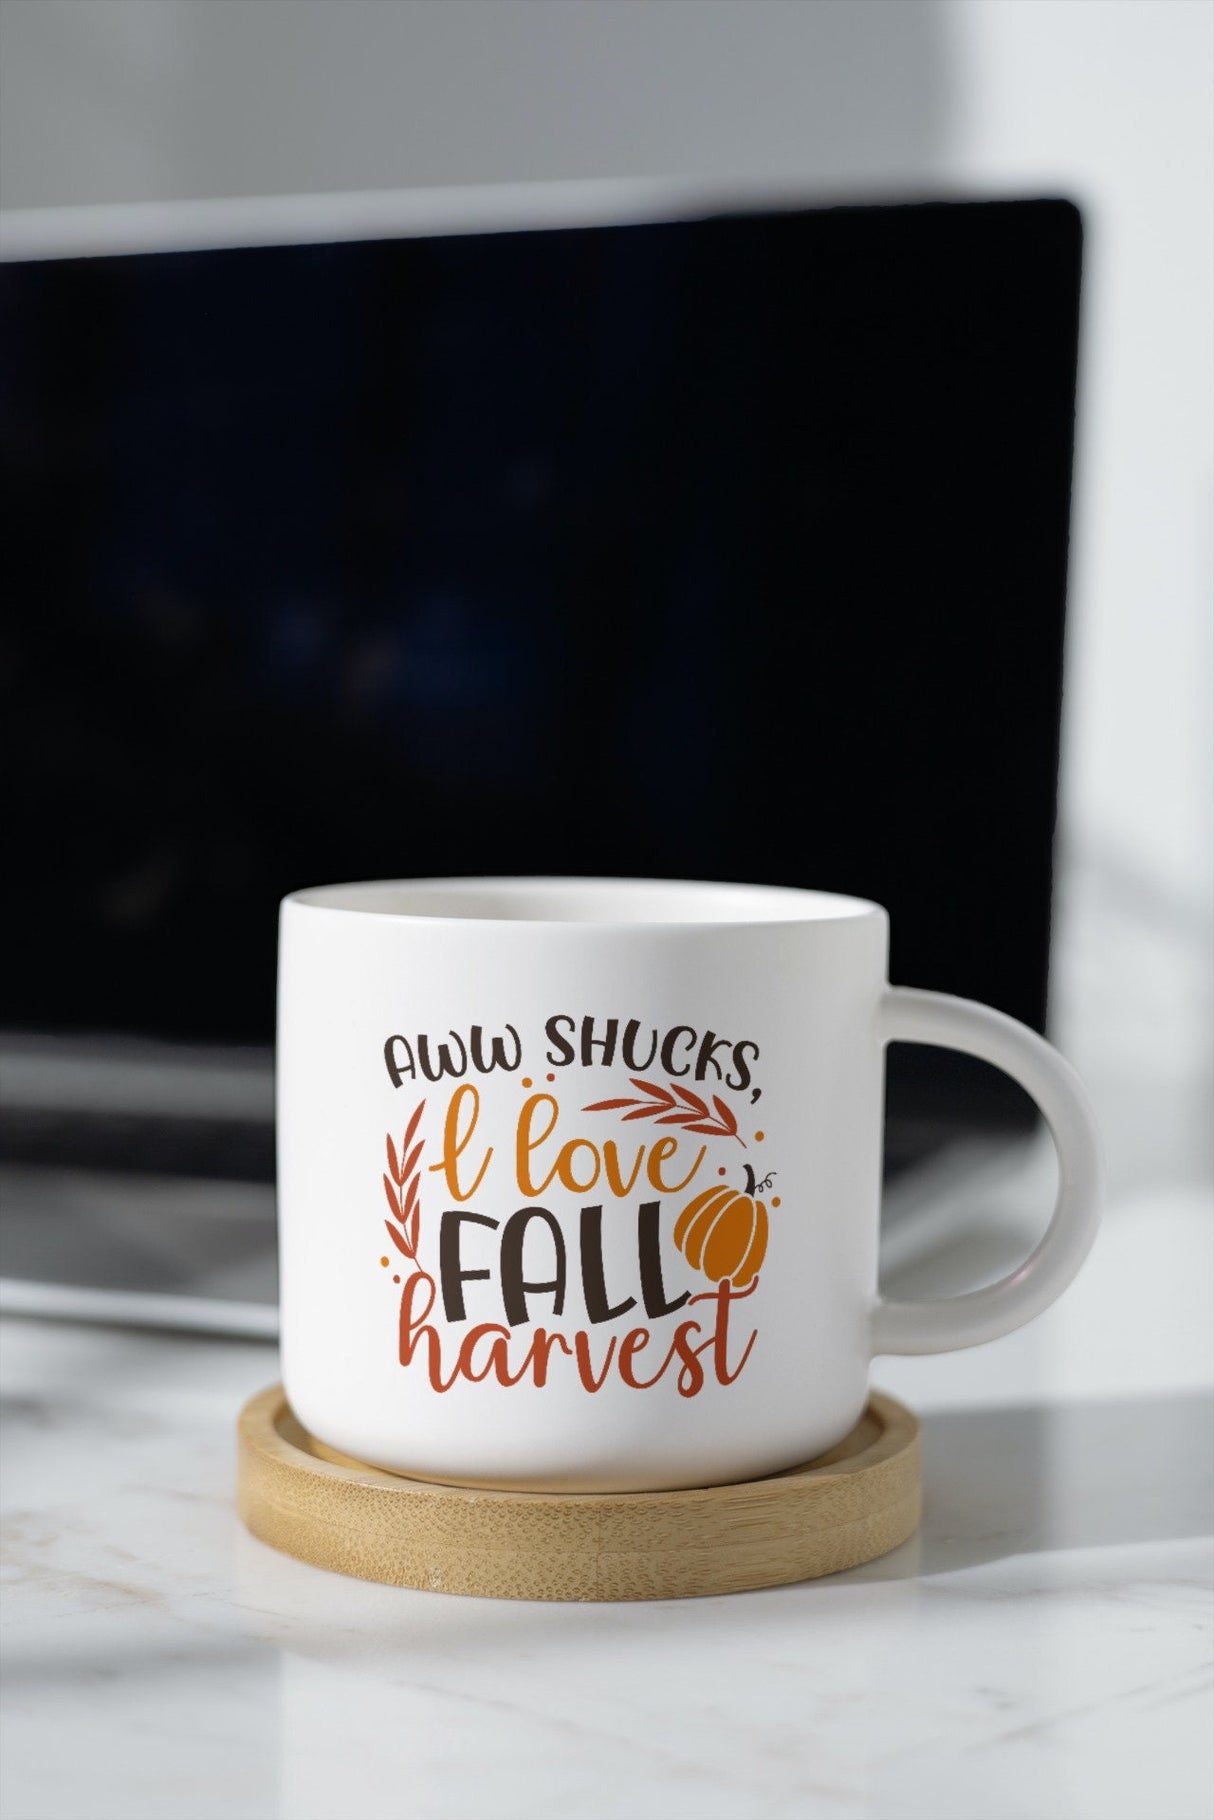 Aww shucks, I love fall harvest SVG Cut File